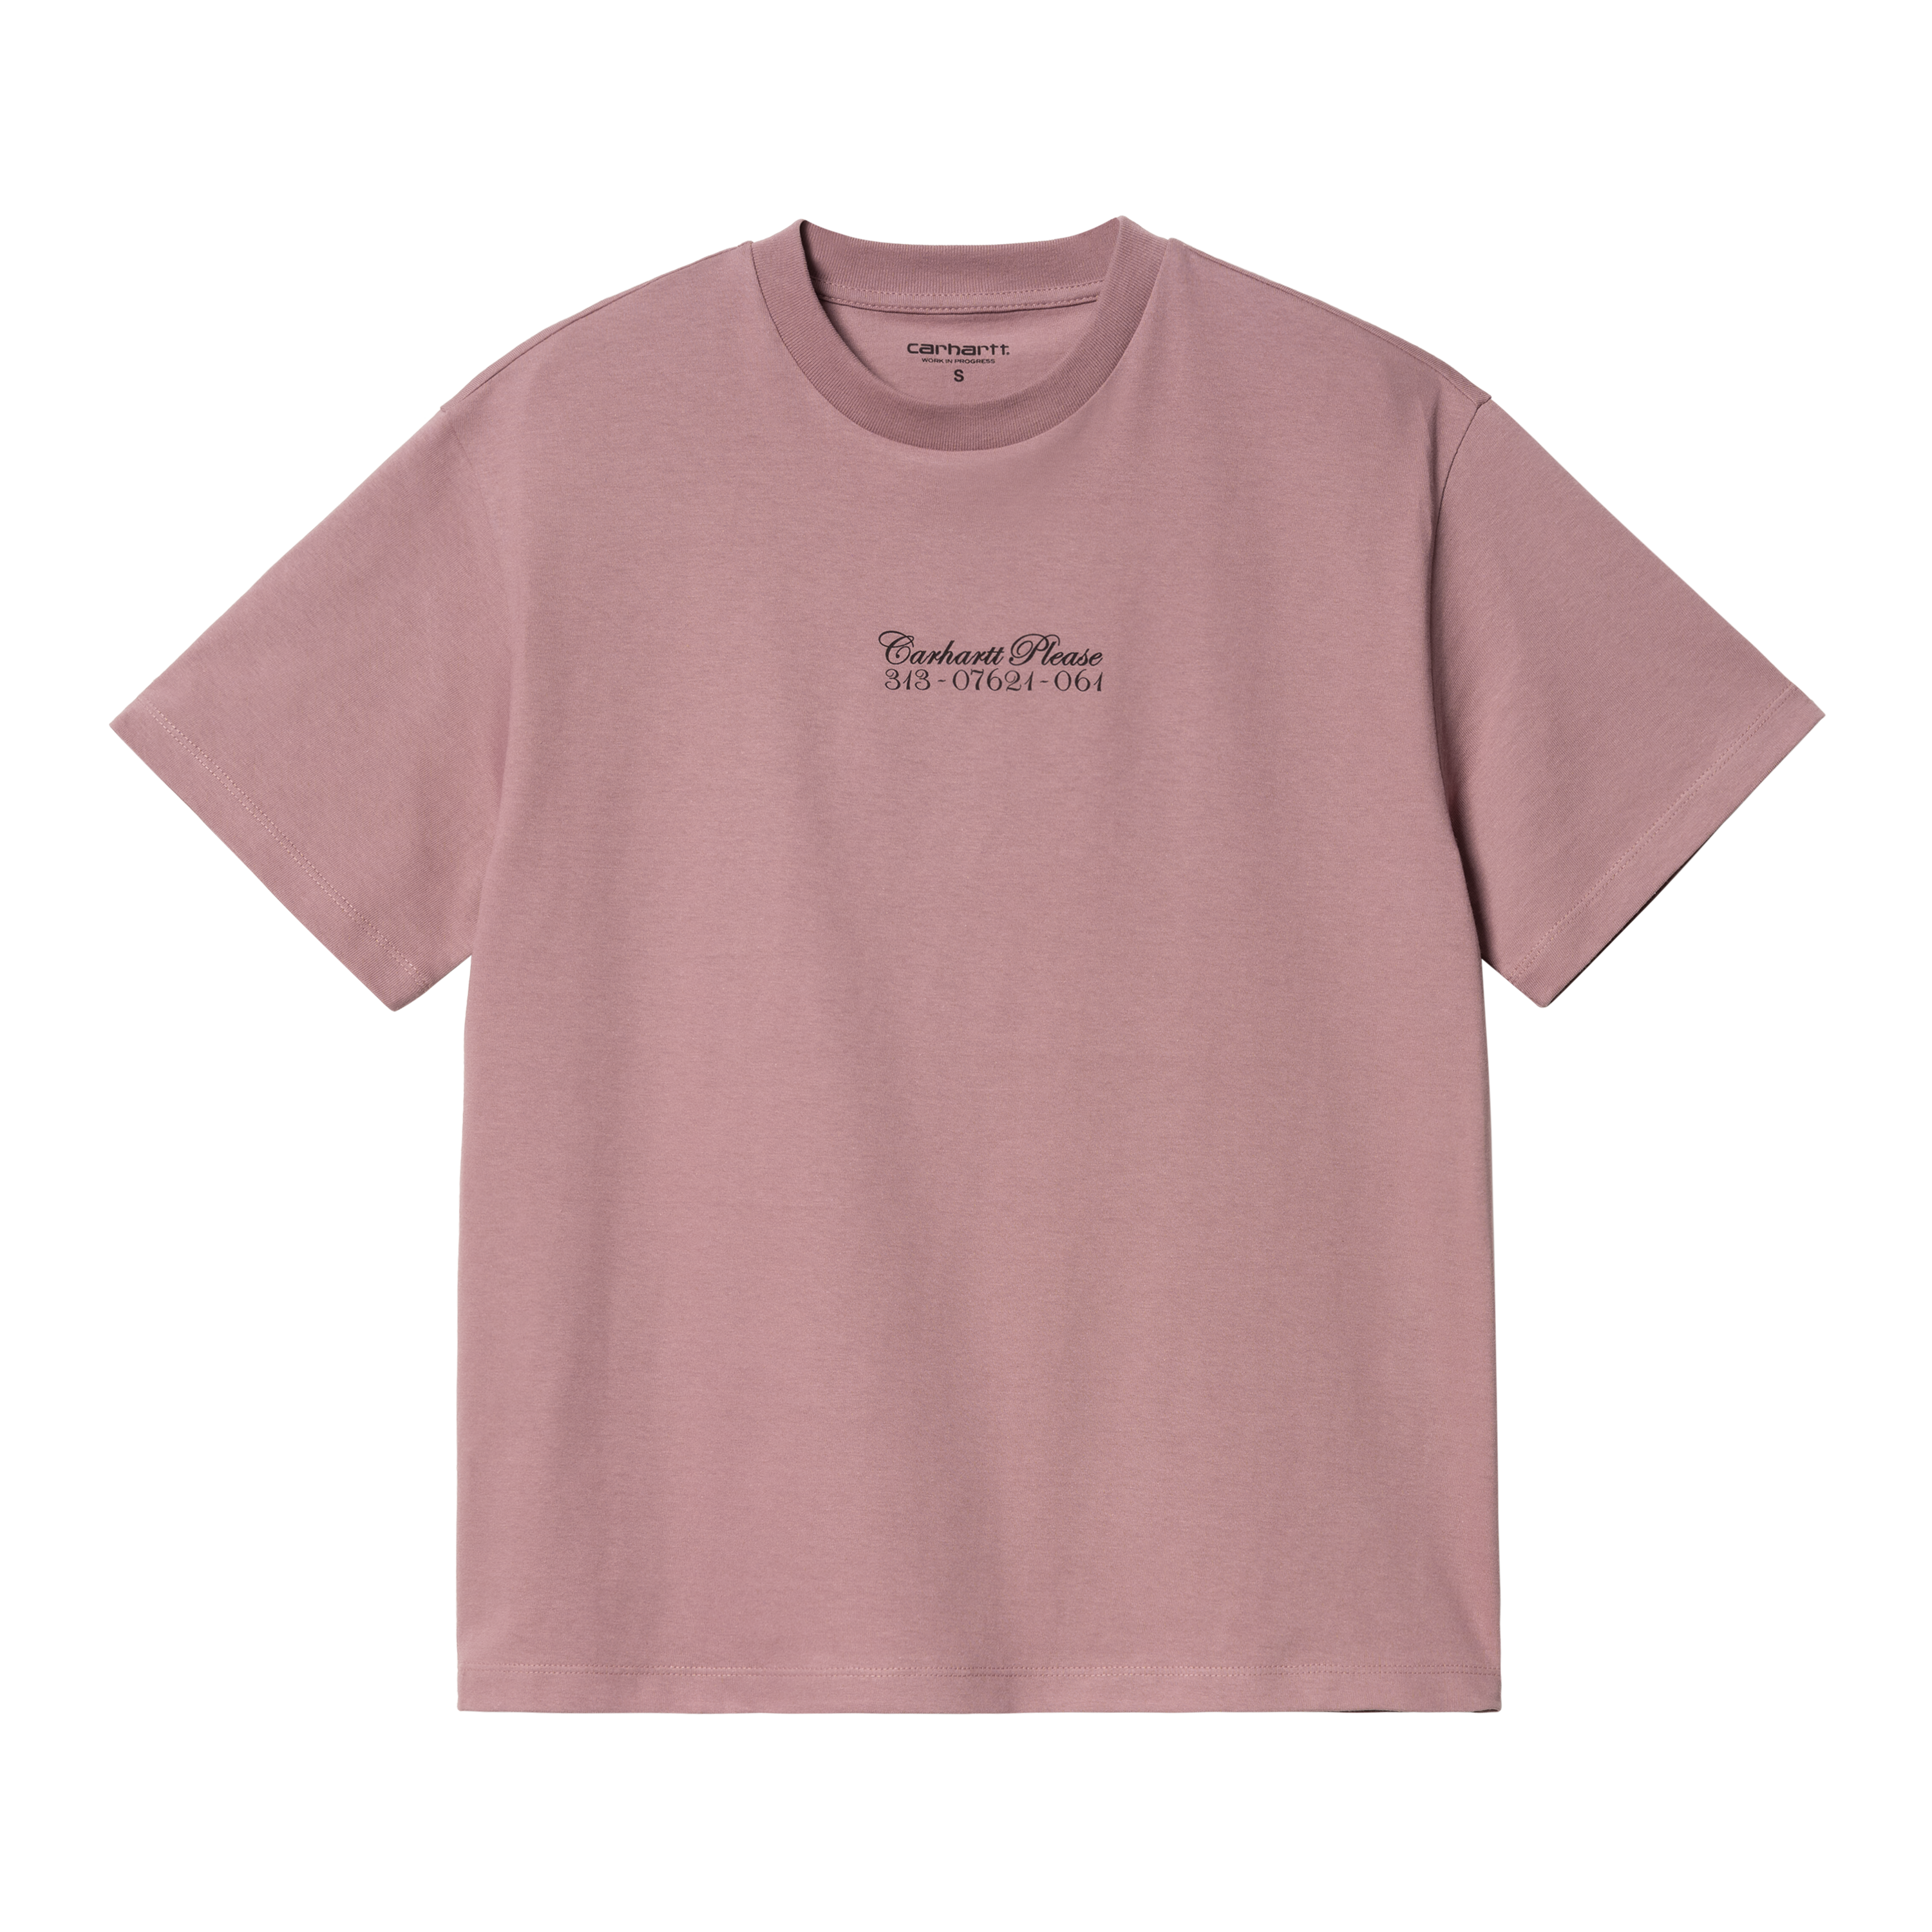 Carhartt WIP Women’s Short Sleeve Carhartt Please T-Shirt in Rosa